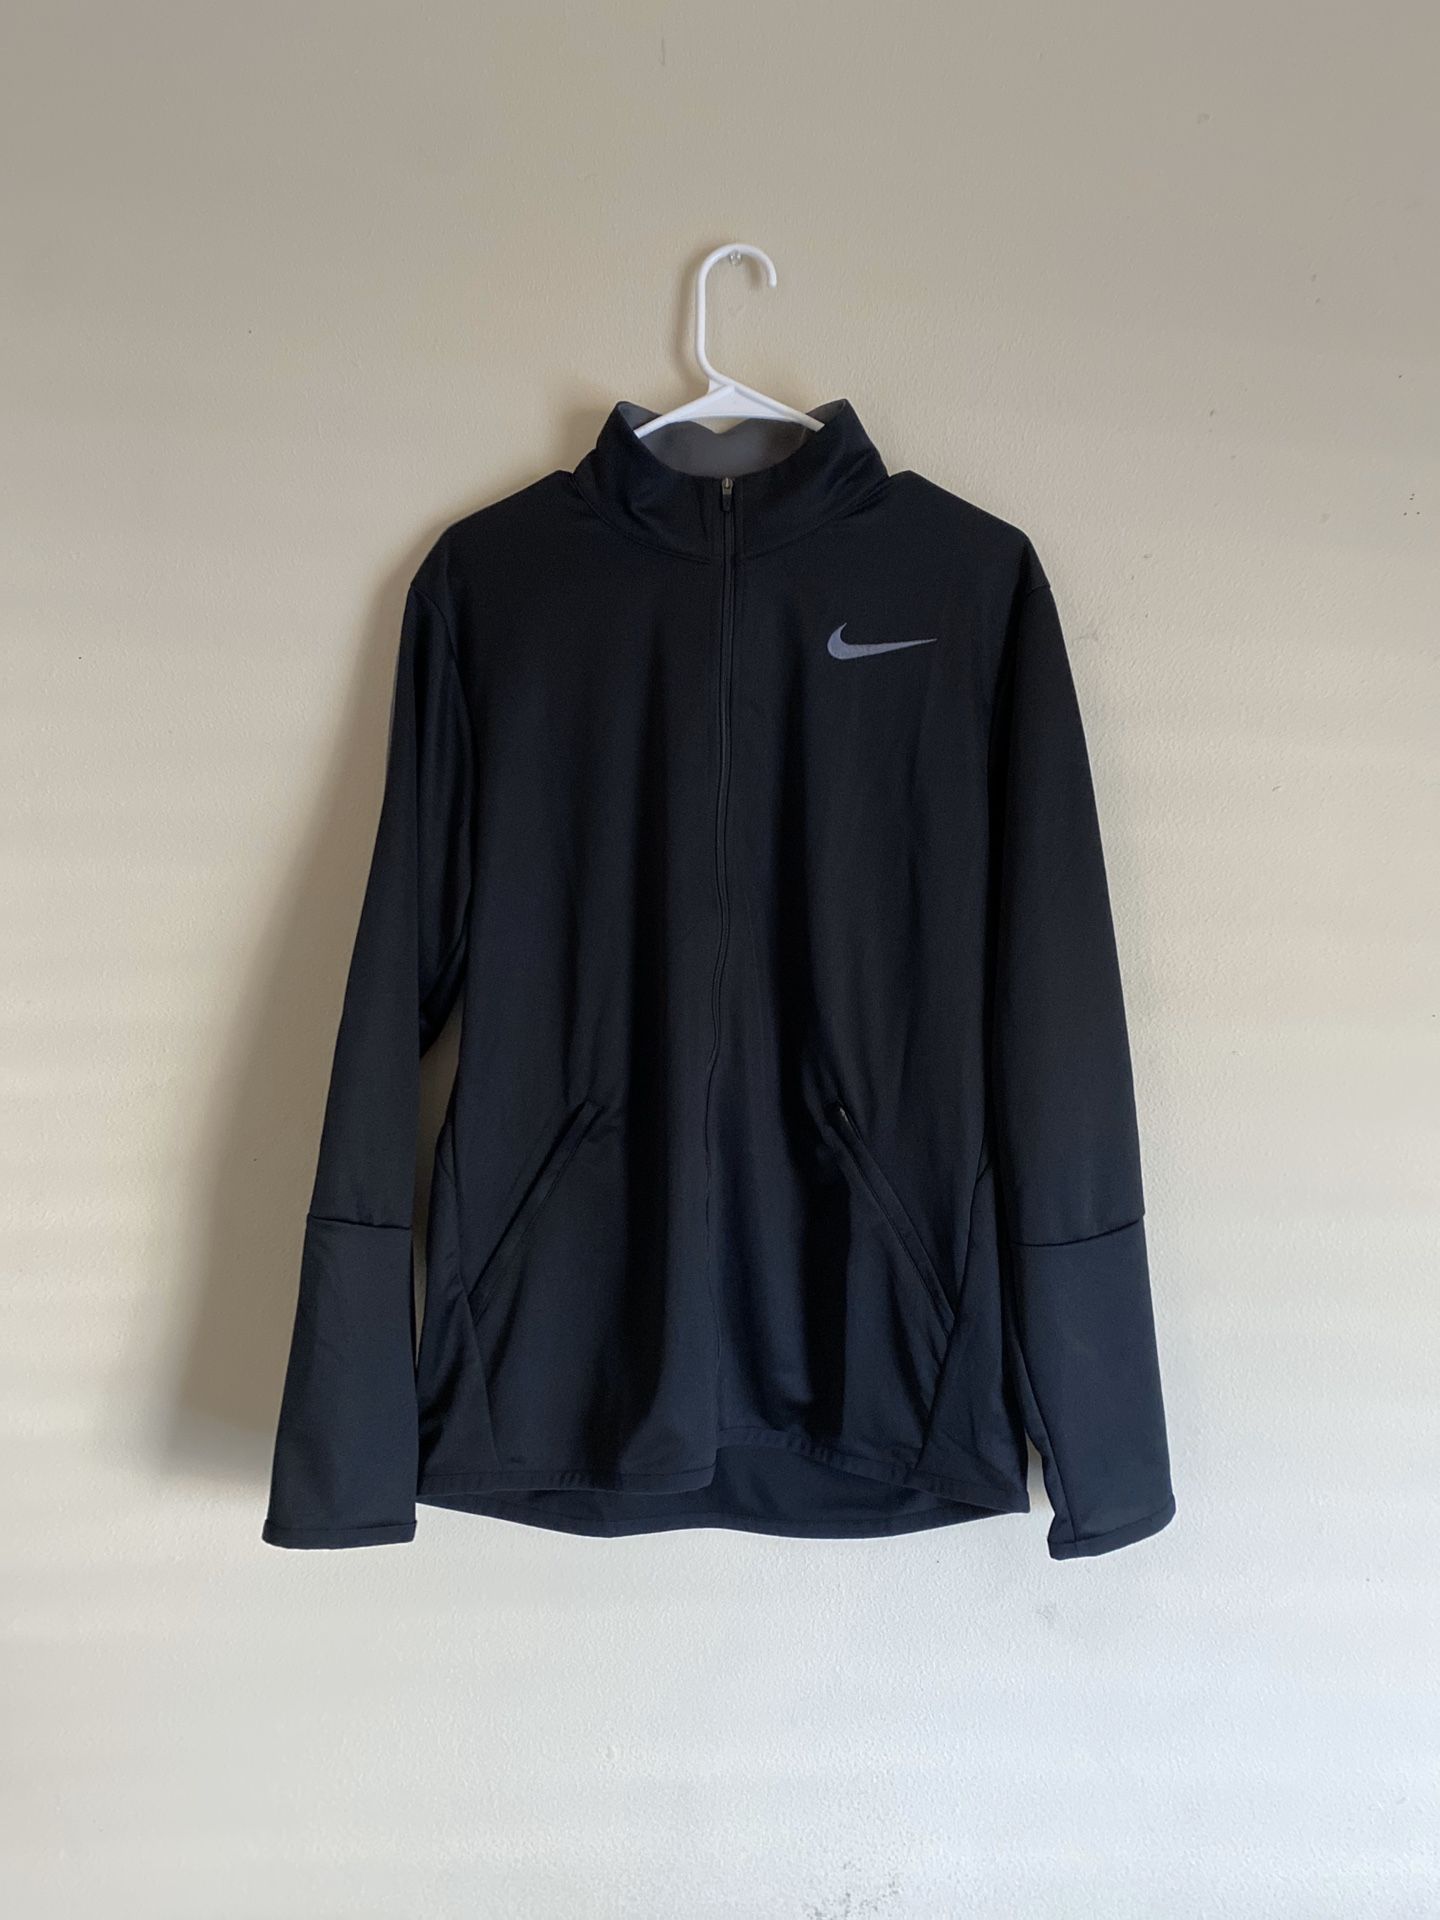 Nike zip up jacket